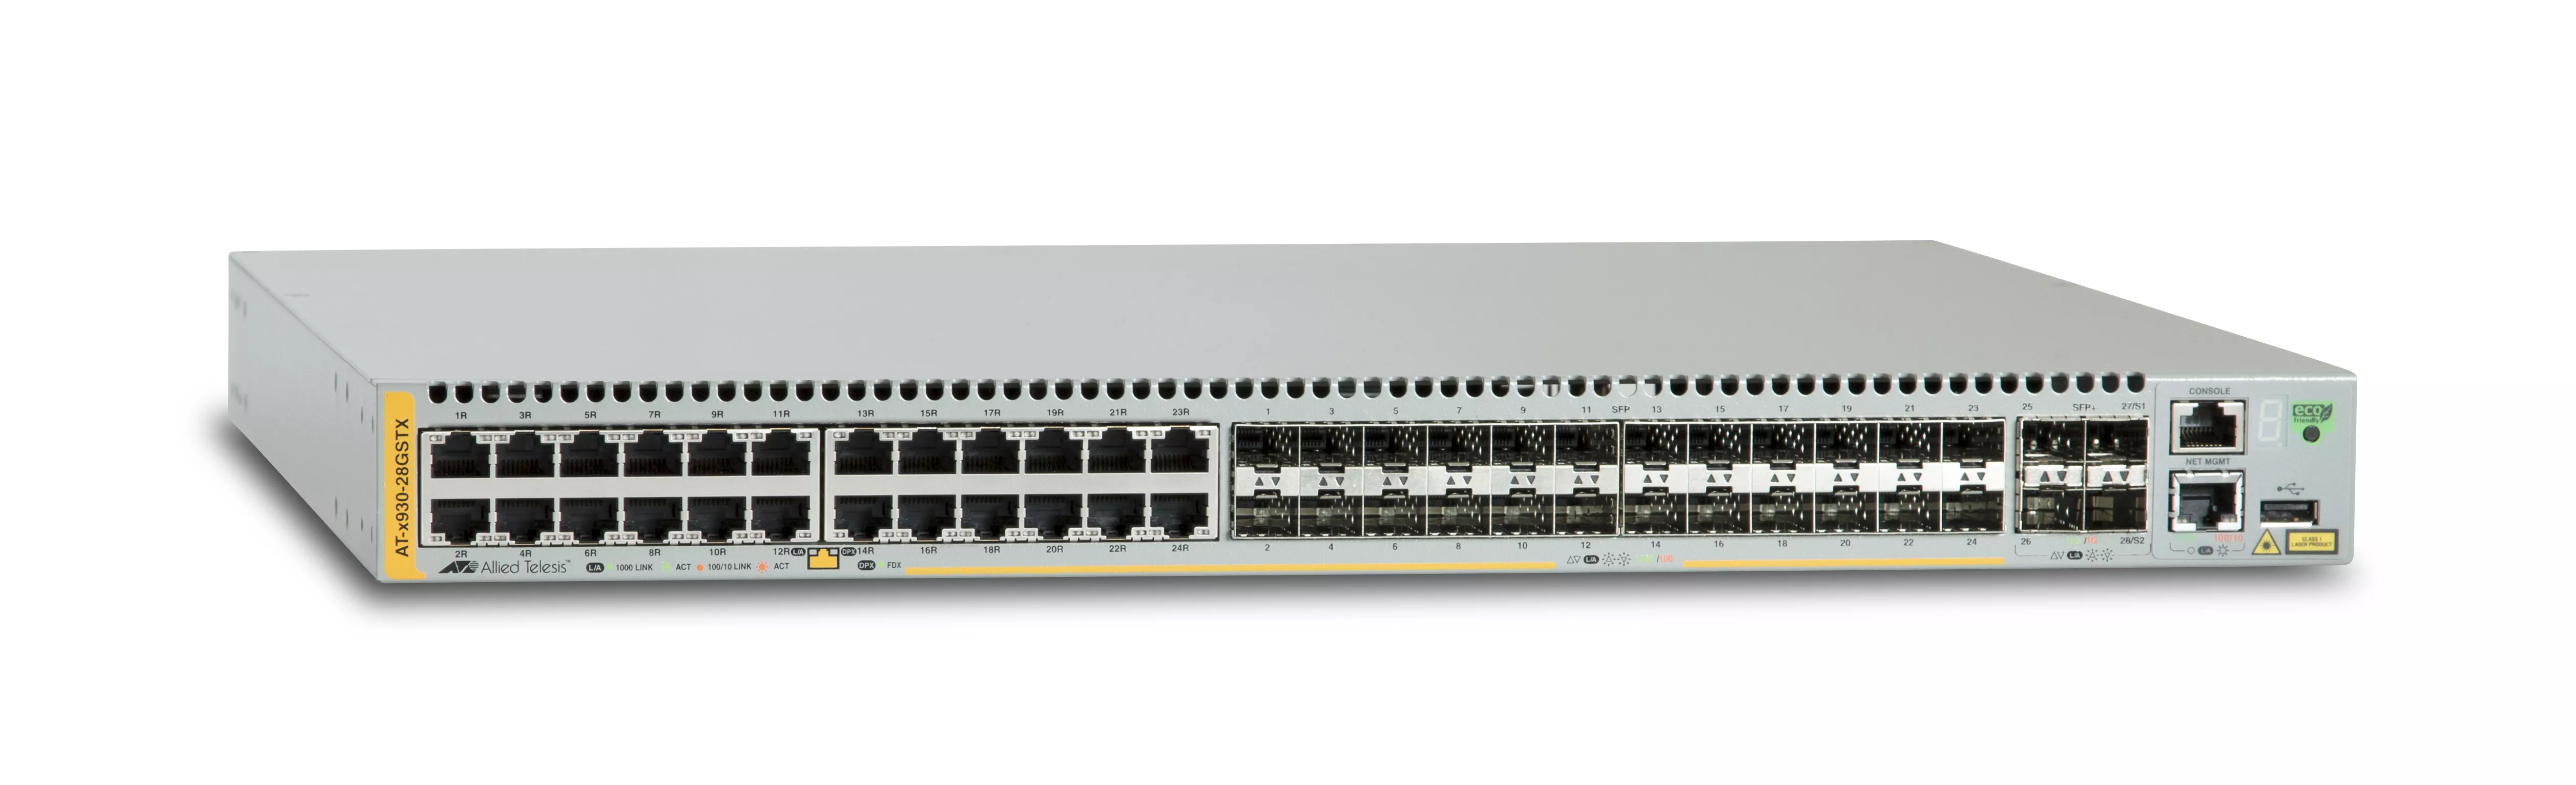 Revendeur officiel ALLIED x930 Advanced Layer 3 GIGABIT Ethernet Intelligent